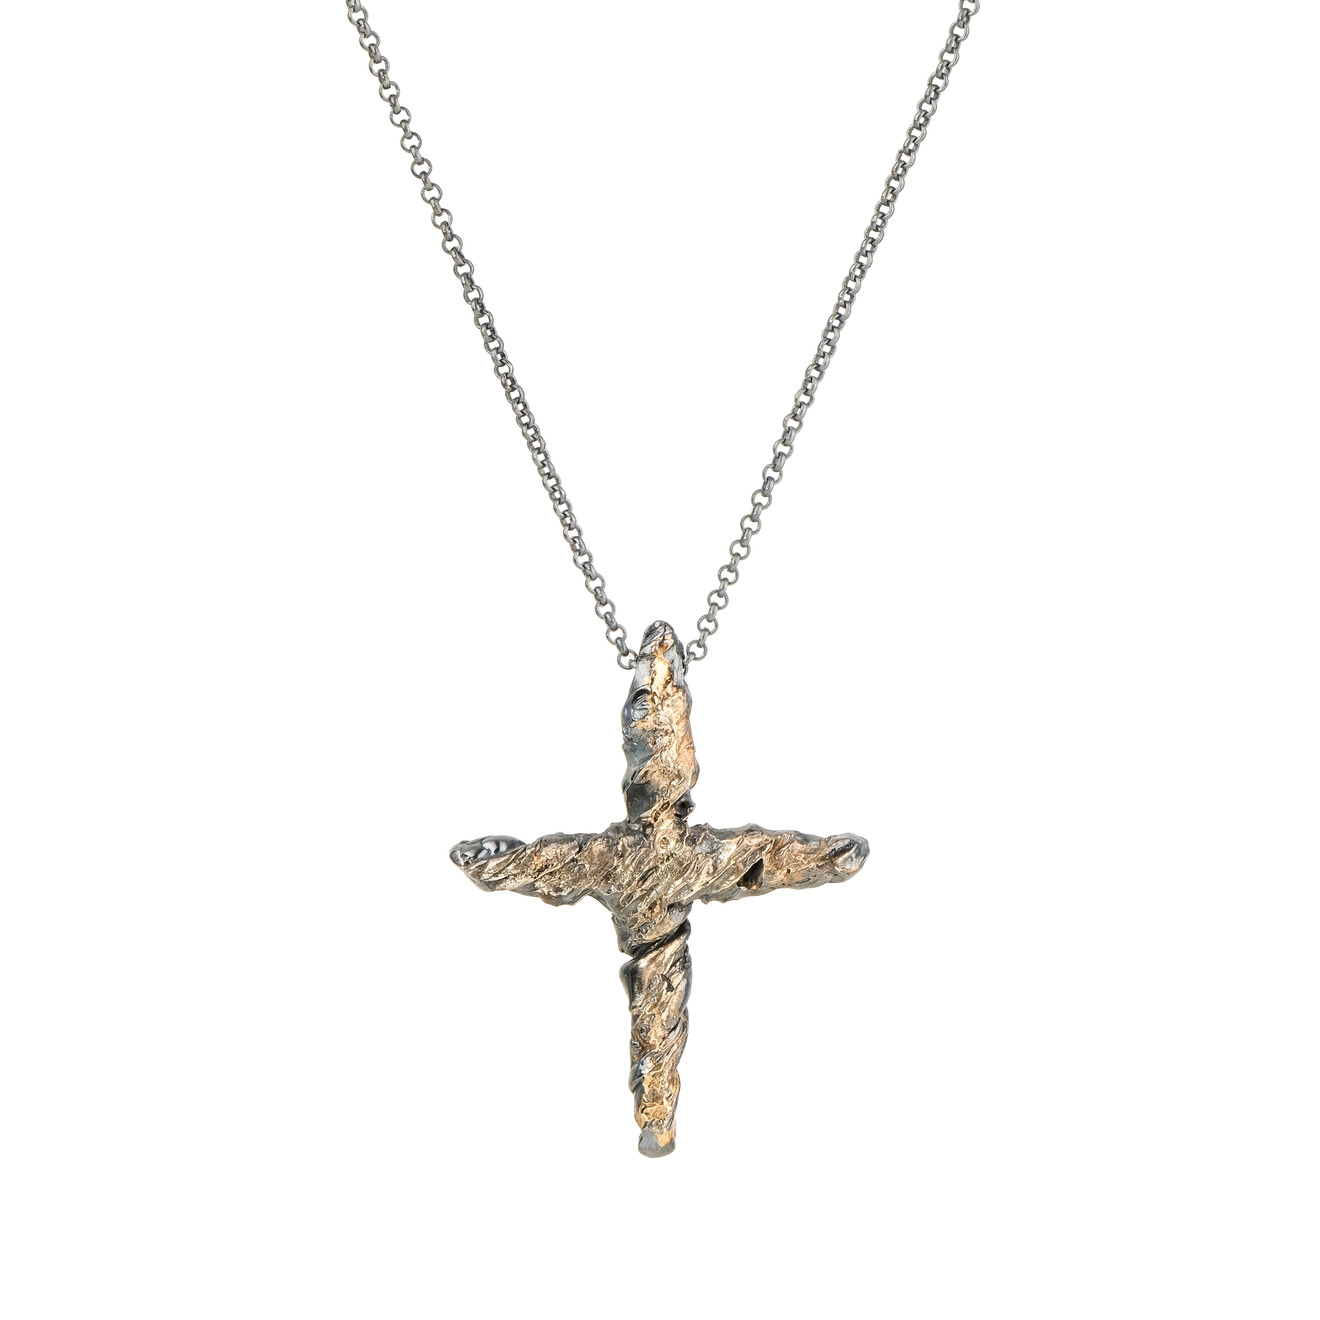 kintsugi jewelry кулон крест из серебра со вставкой из шпинели Kintsugi Jewelry Кулон Cross из серебра с позолотой